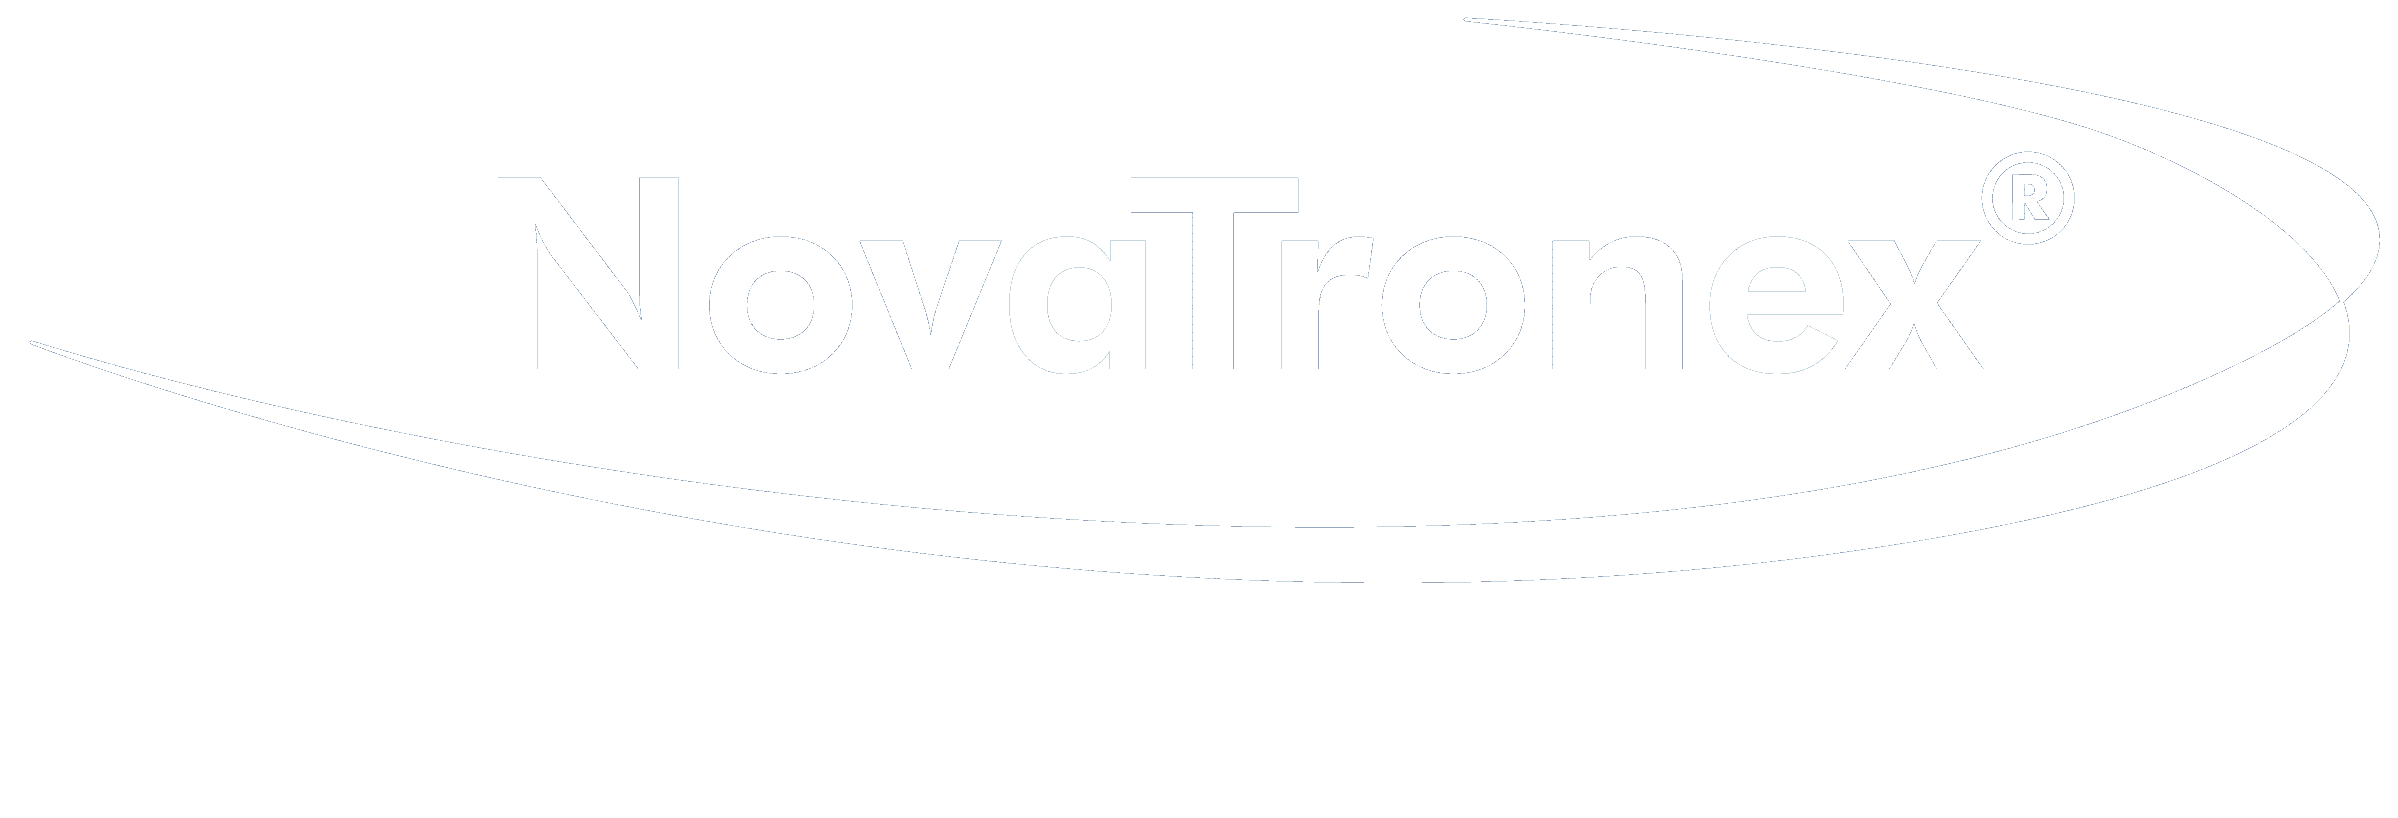 NovaTronex